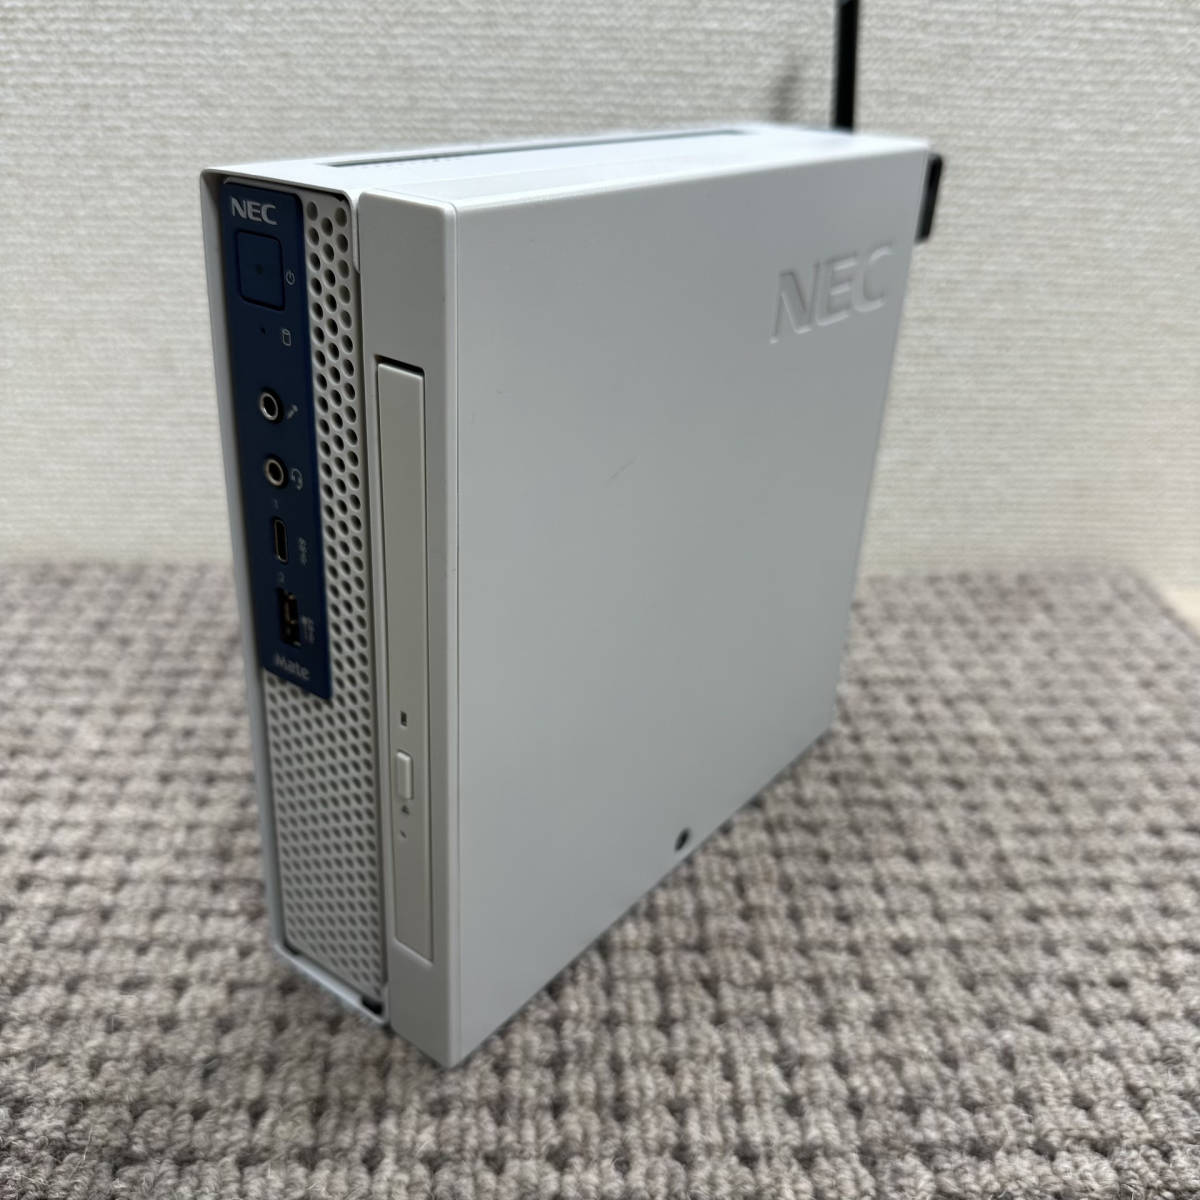 NEC MKL31 ミニPC windows11 Pro office pro plus 2021 core- i3 8100T メモリ16GB M.2 SSD512GB HDD500GB WiFi_画像1